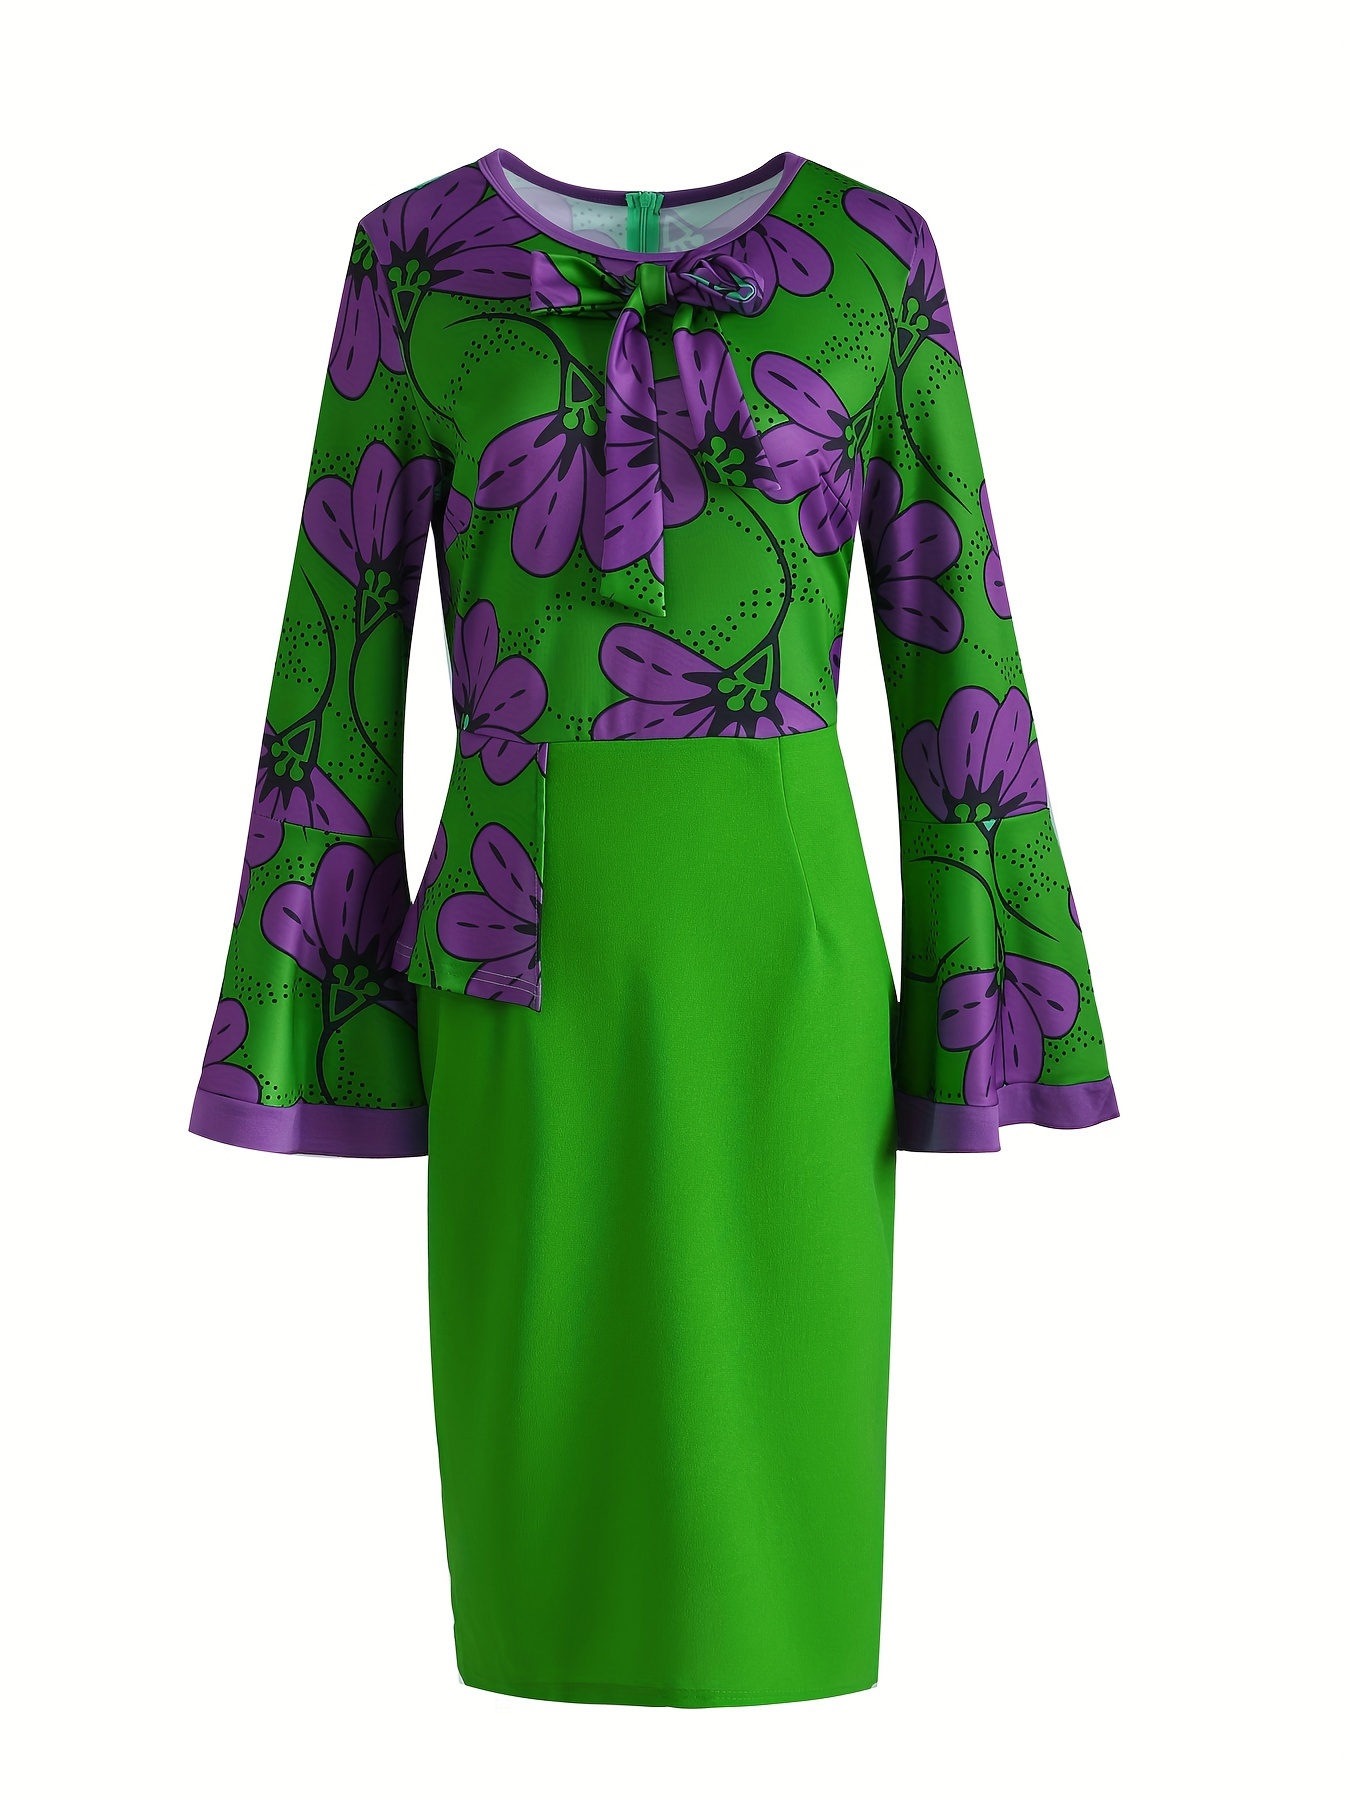 Floral Print Bodycon Splicing Φόρεμα, Κομψό Μακρυμάνικο Φόρεμα Για Την Άνοιξη Και Το Φθινόπωρο, Γυναικεία Ρούχα